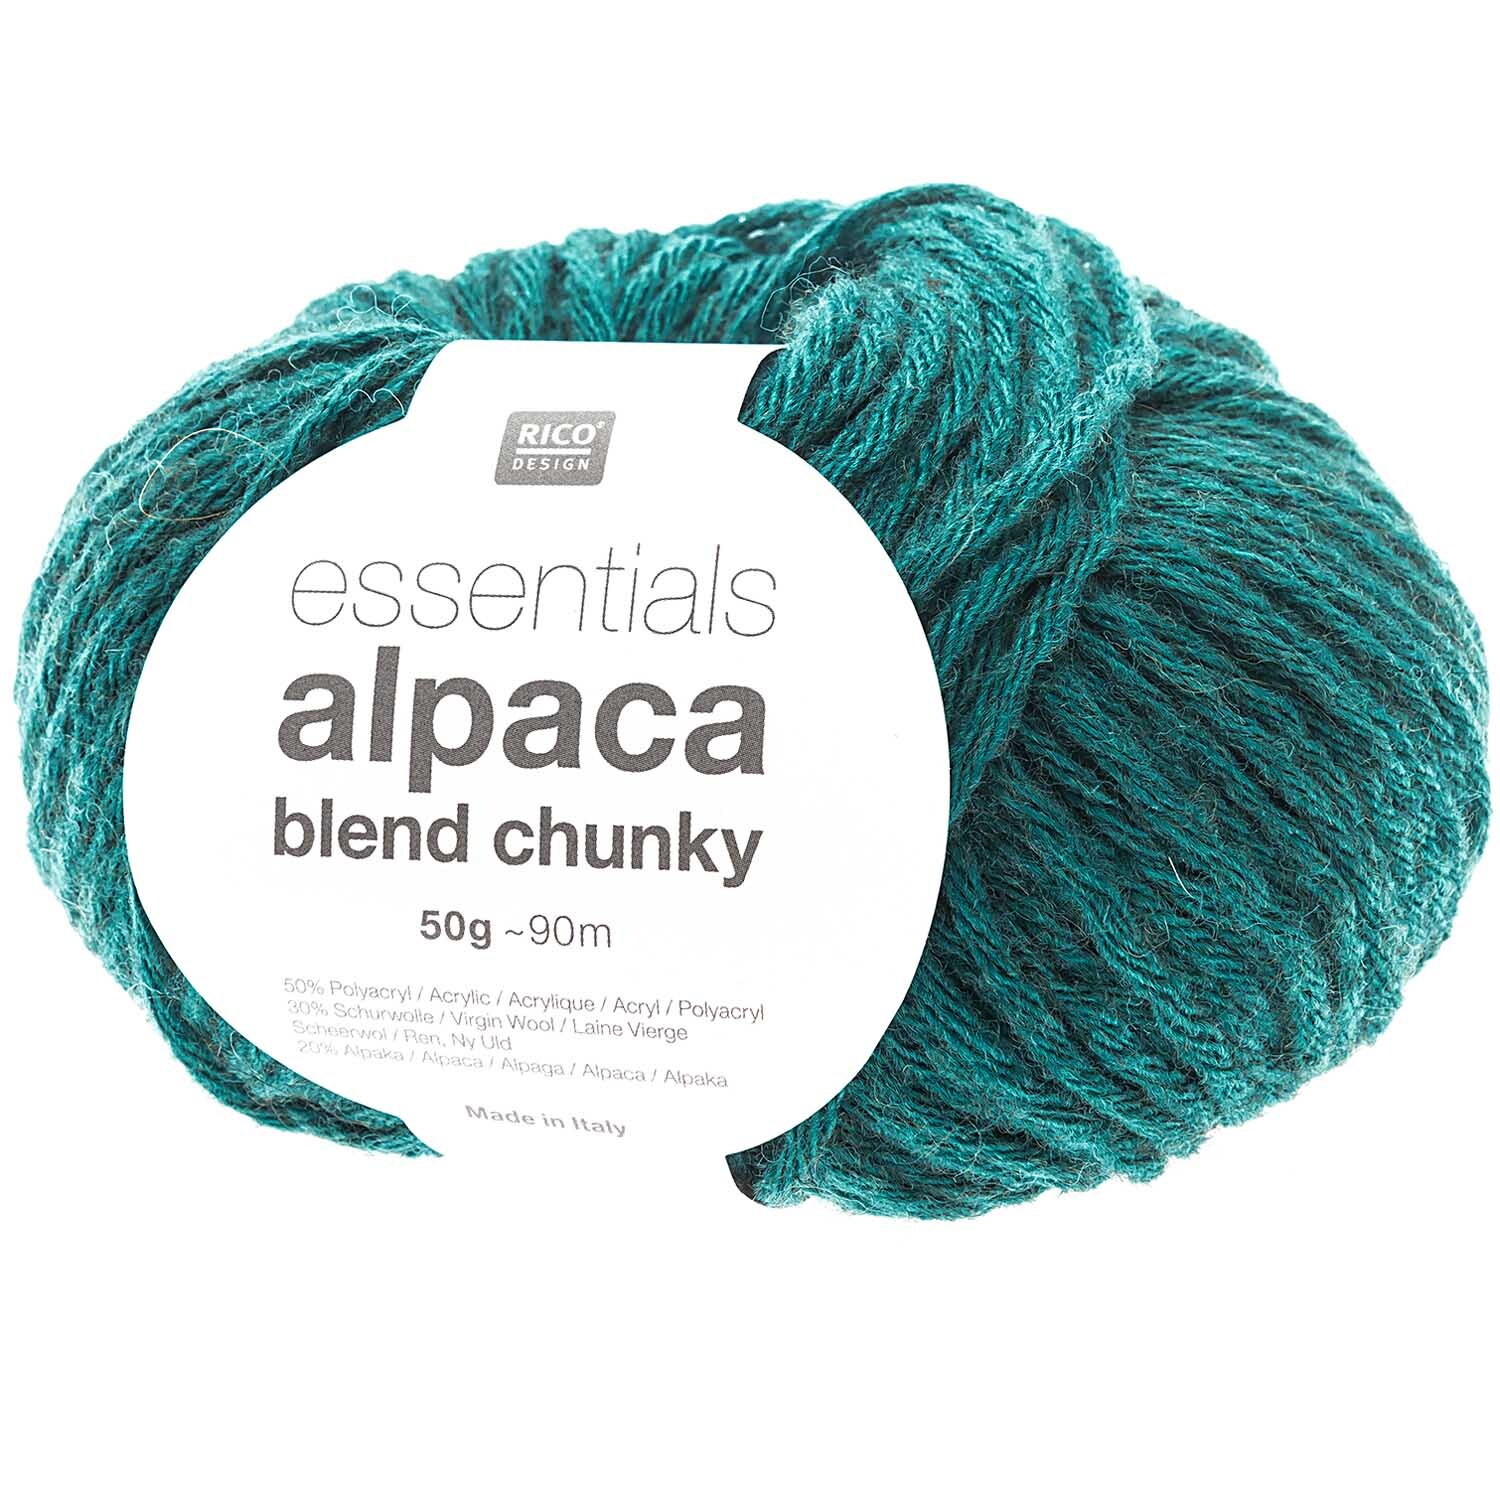 Essentials Alpaca Blend chunky